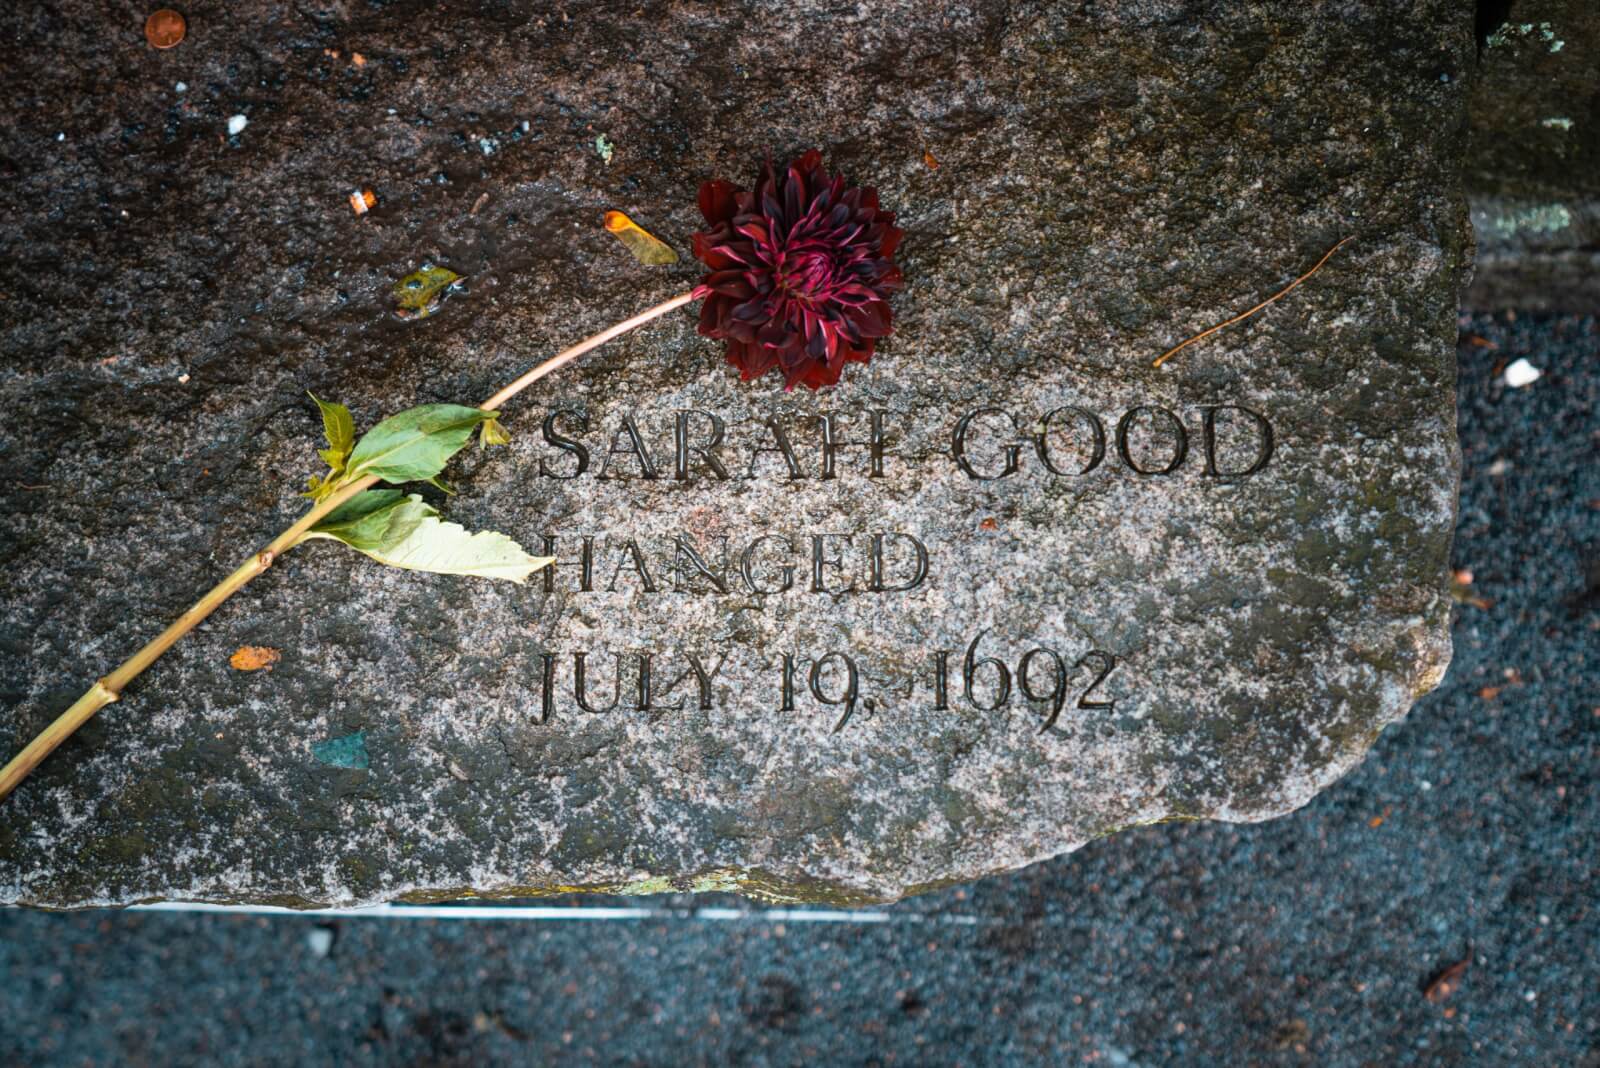 A rose for Sarah Good at the Salem Witch Memorial